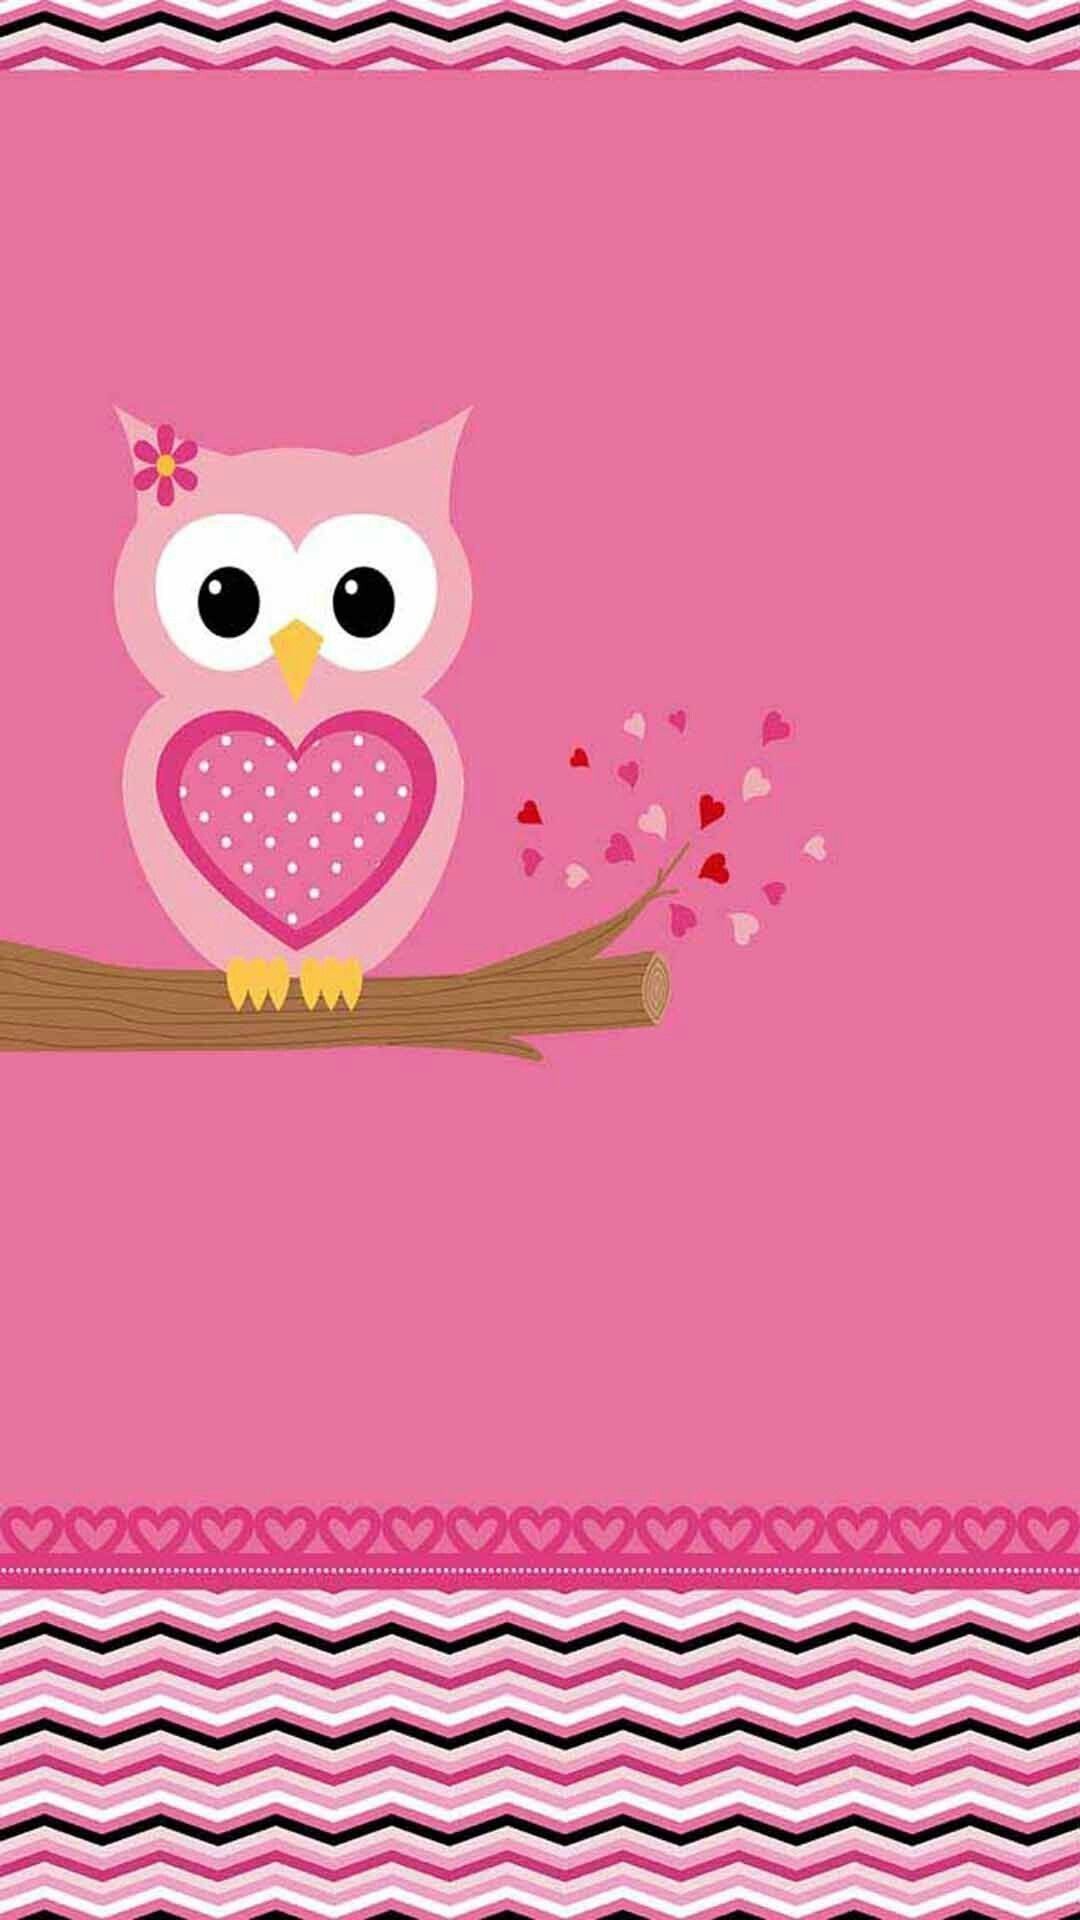 Cute Owl Wallpaper Home Screen Animals Wallpaper Ideas in 2020